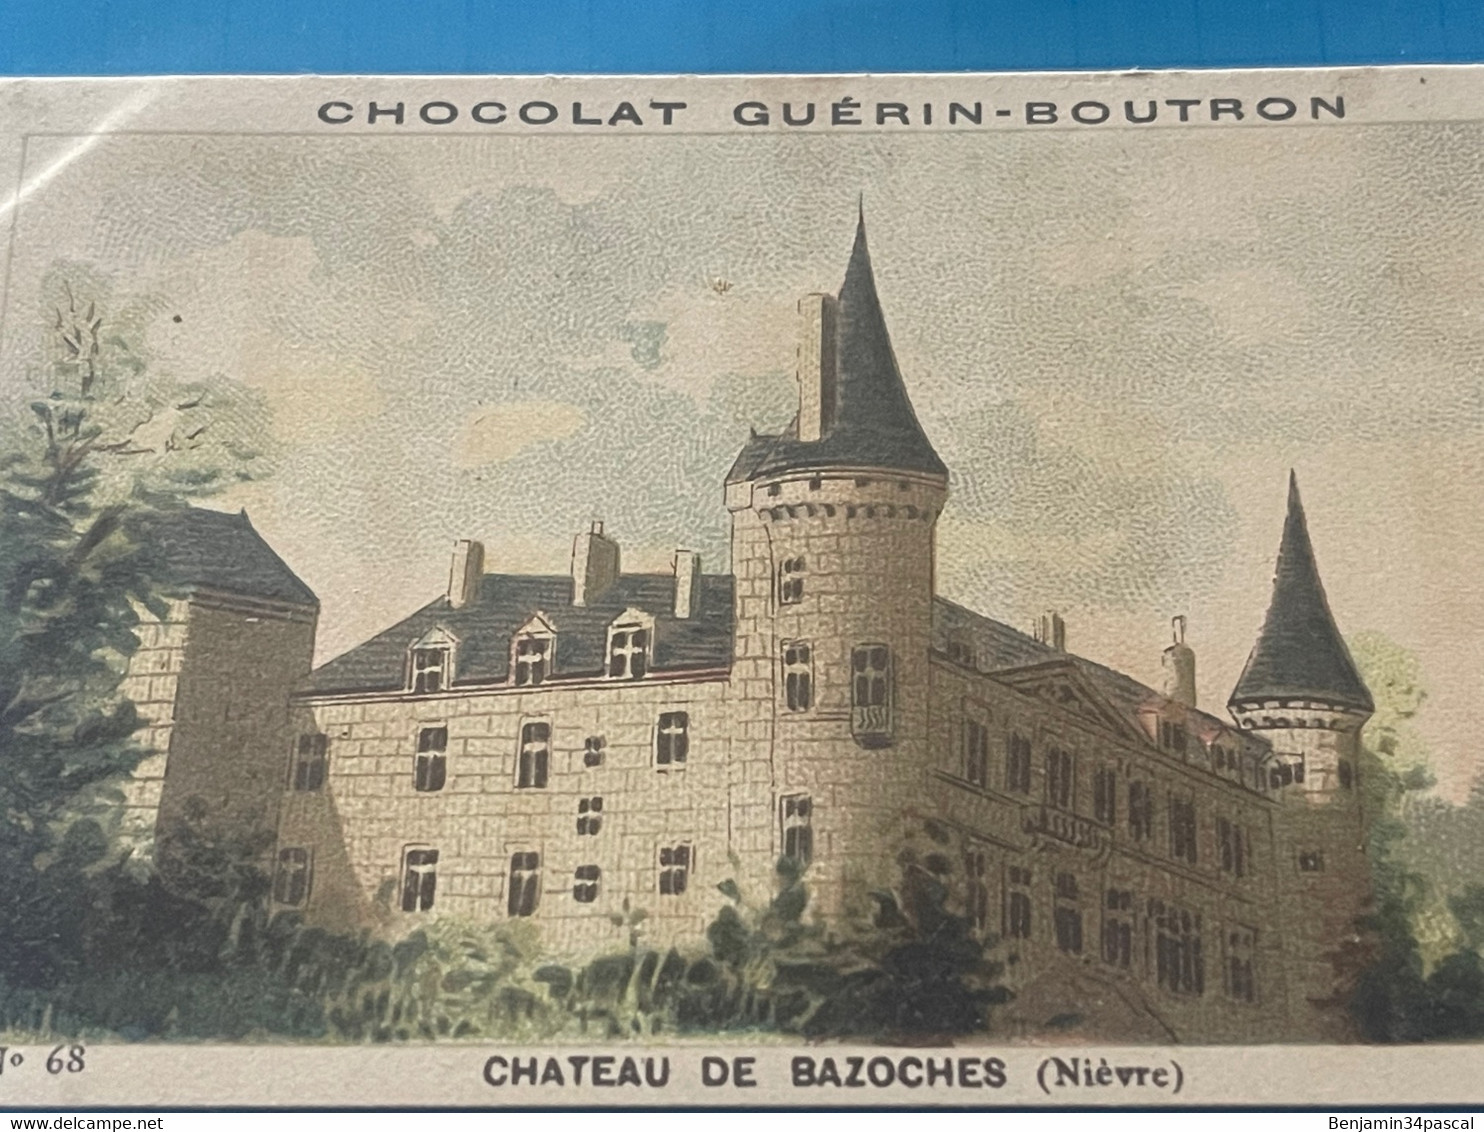 Chocolat GUÉRIN-BOUTRON Image -Chromo Ancienne - Château De Bazoches (Nièvre) - Chocolat